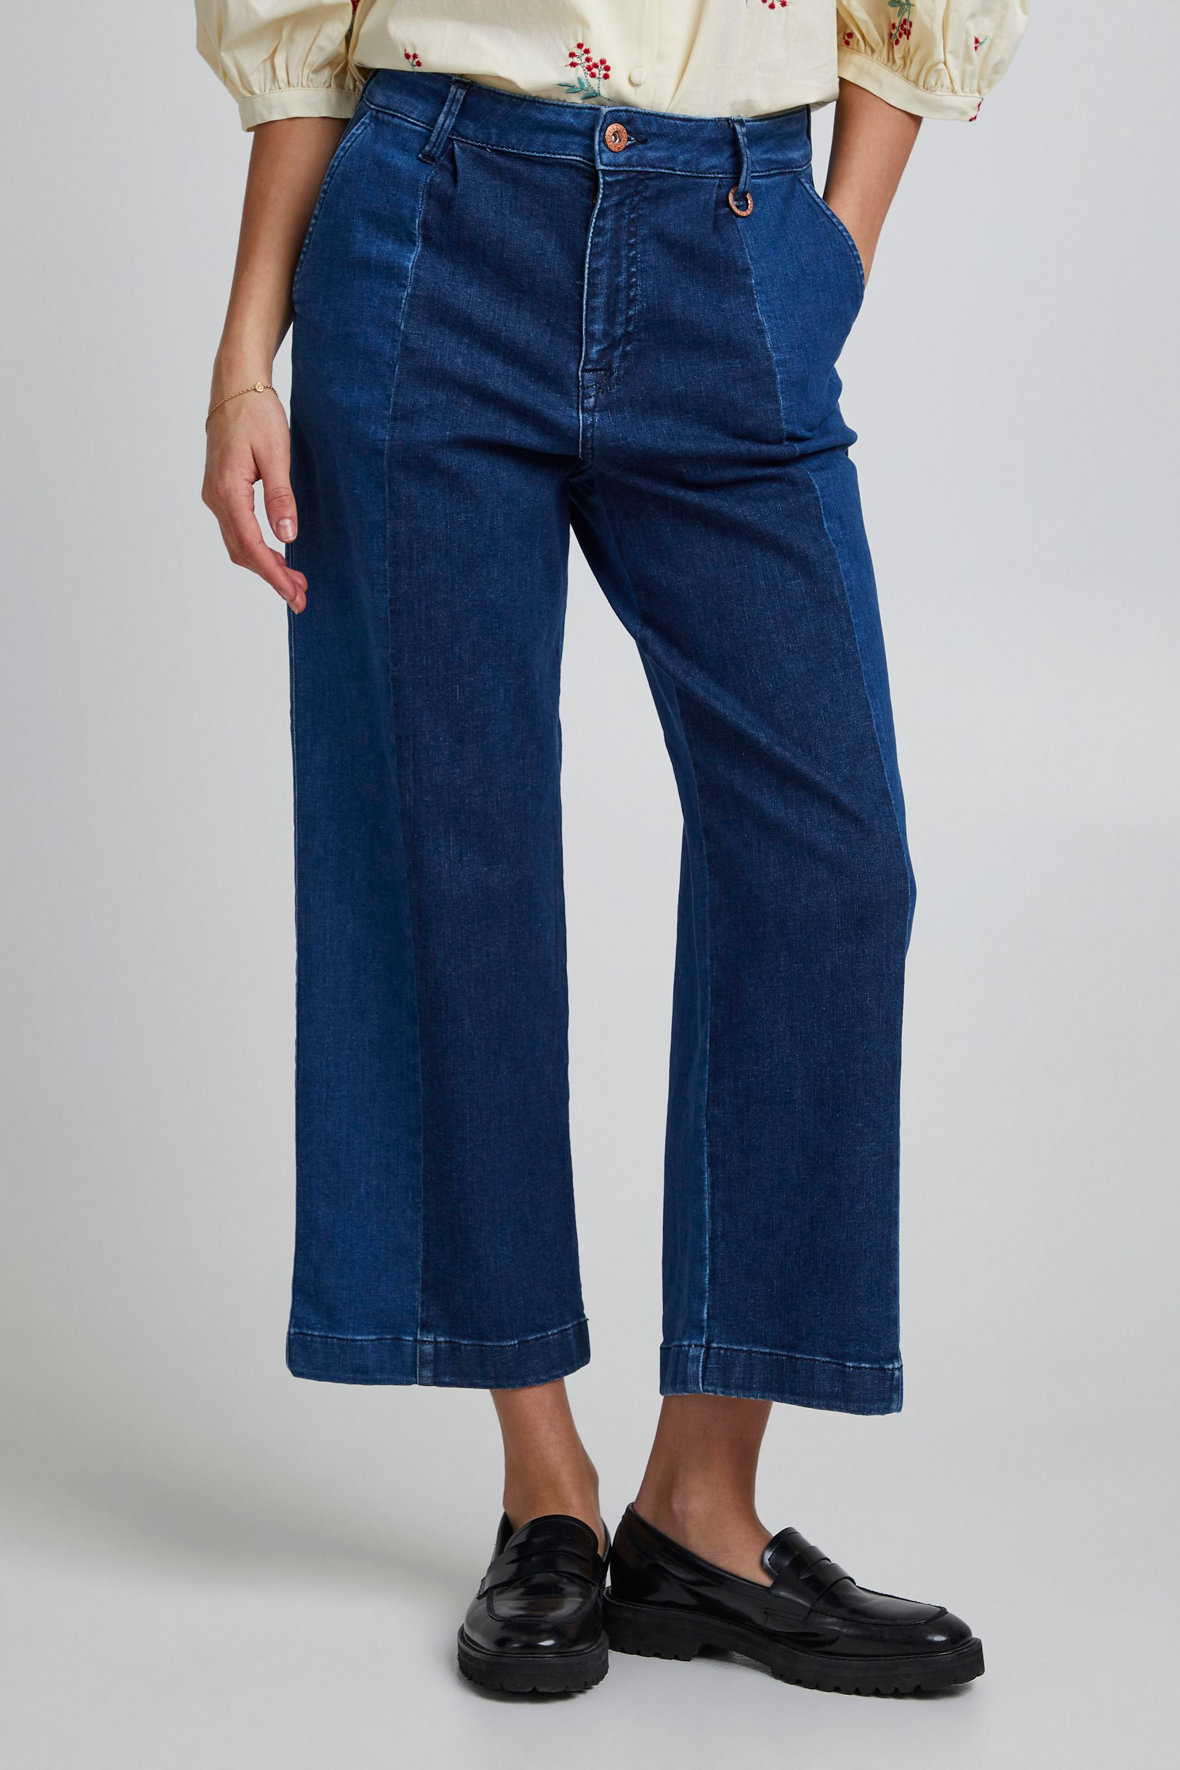 Pulz pz Jeans kassebukser - wide leg ultra high waist - denim - Hos Lohse